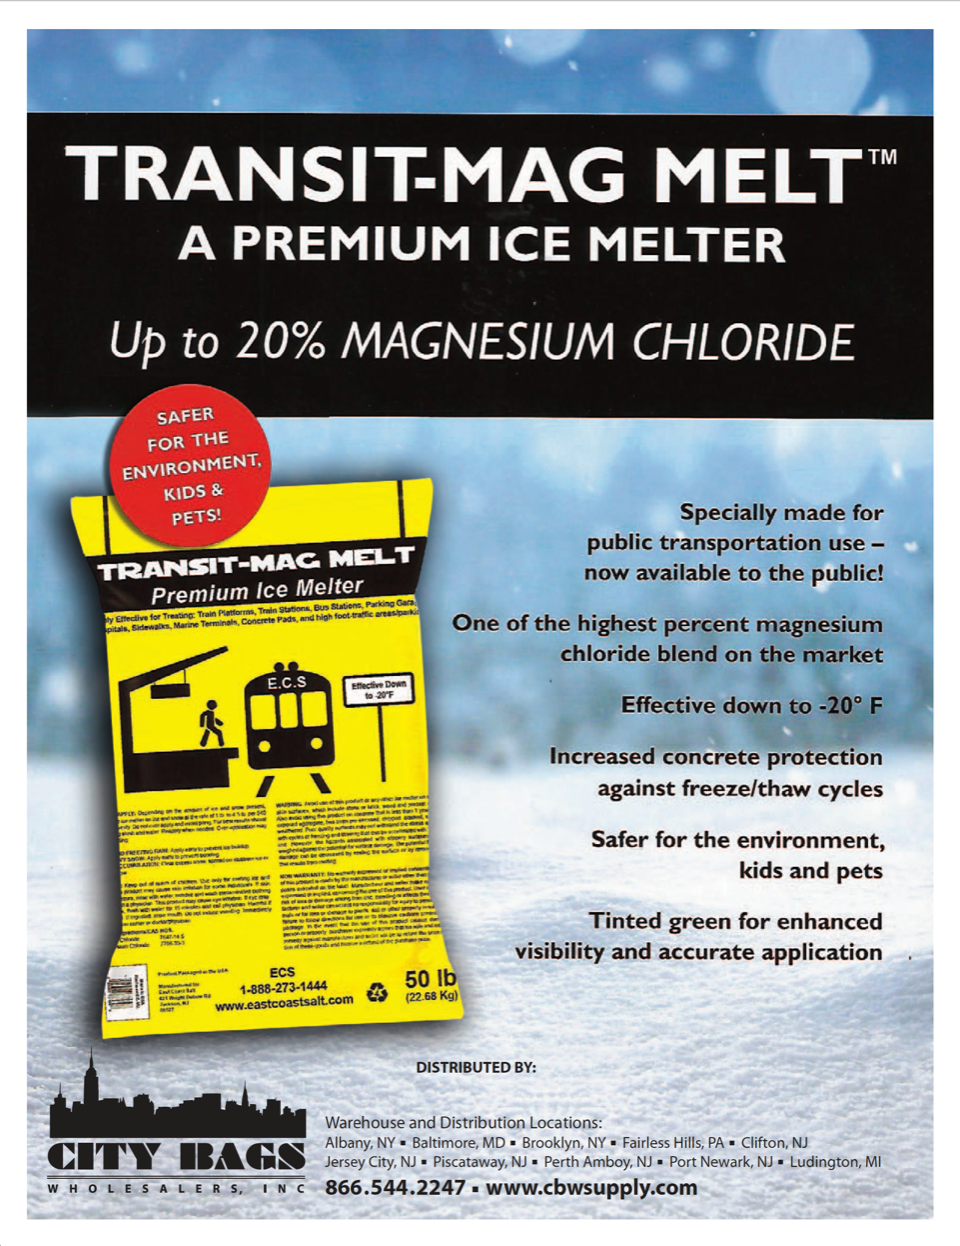 Transit-Mag Melt - Ice Melt